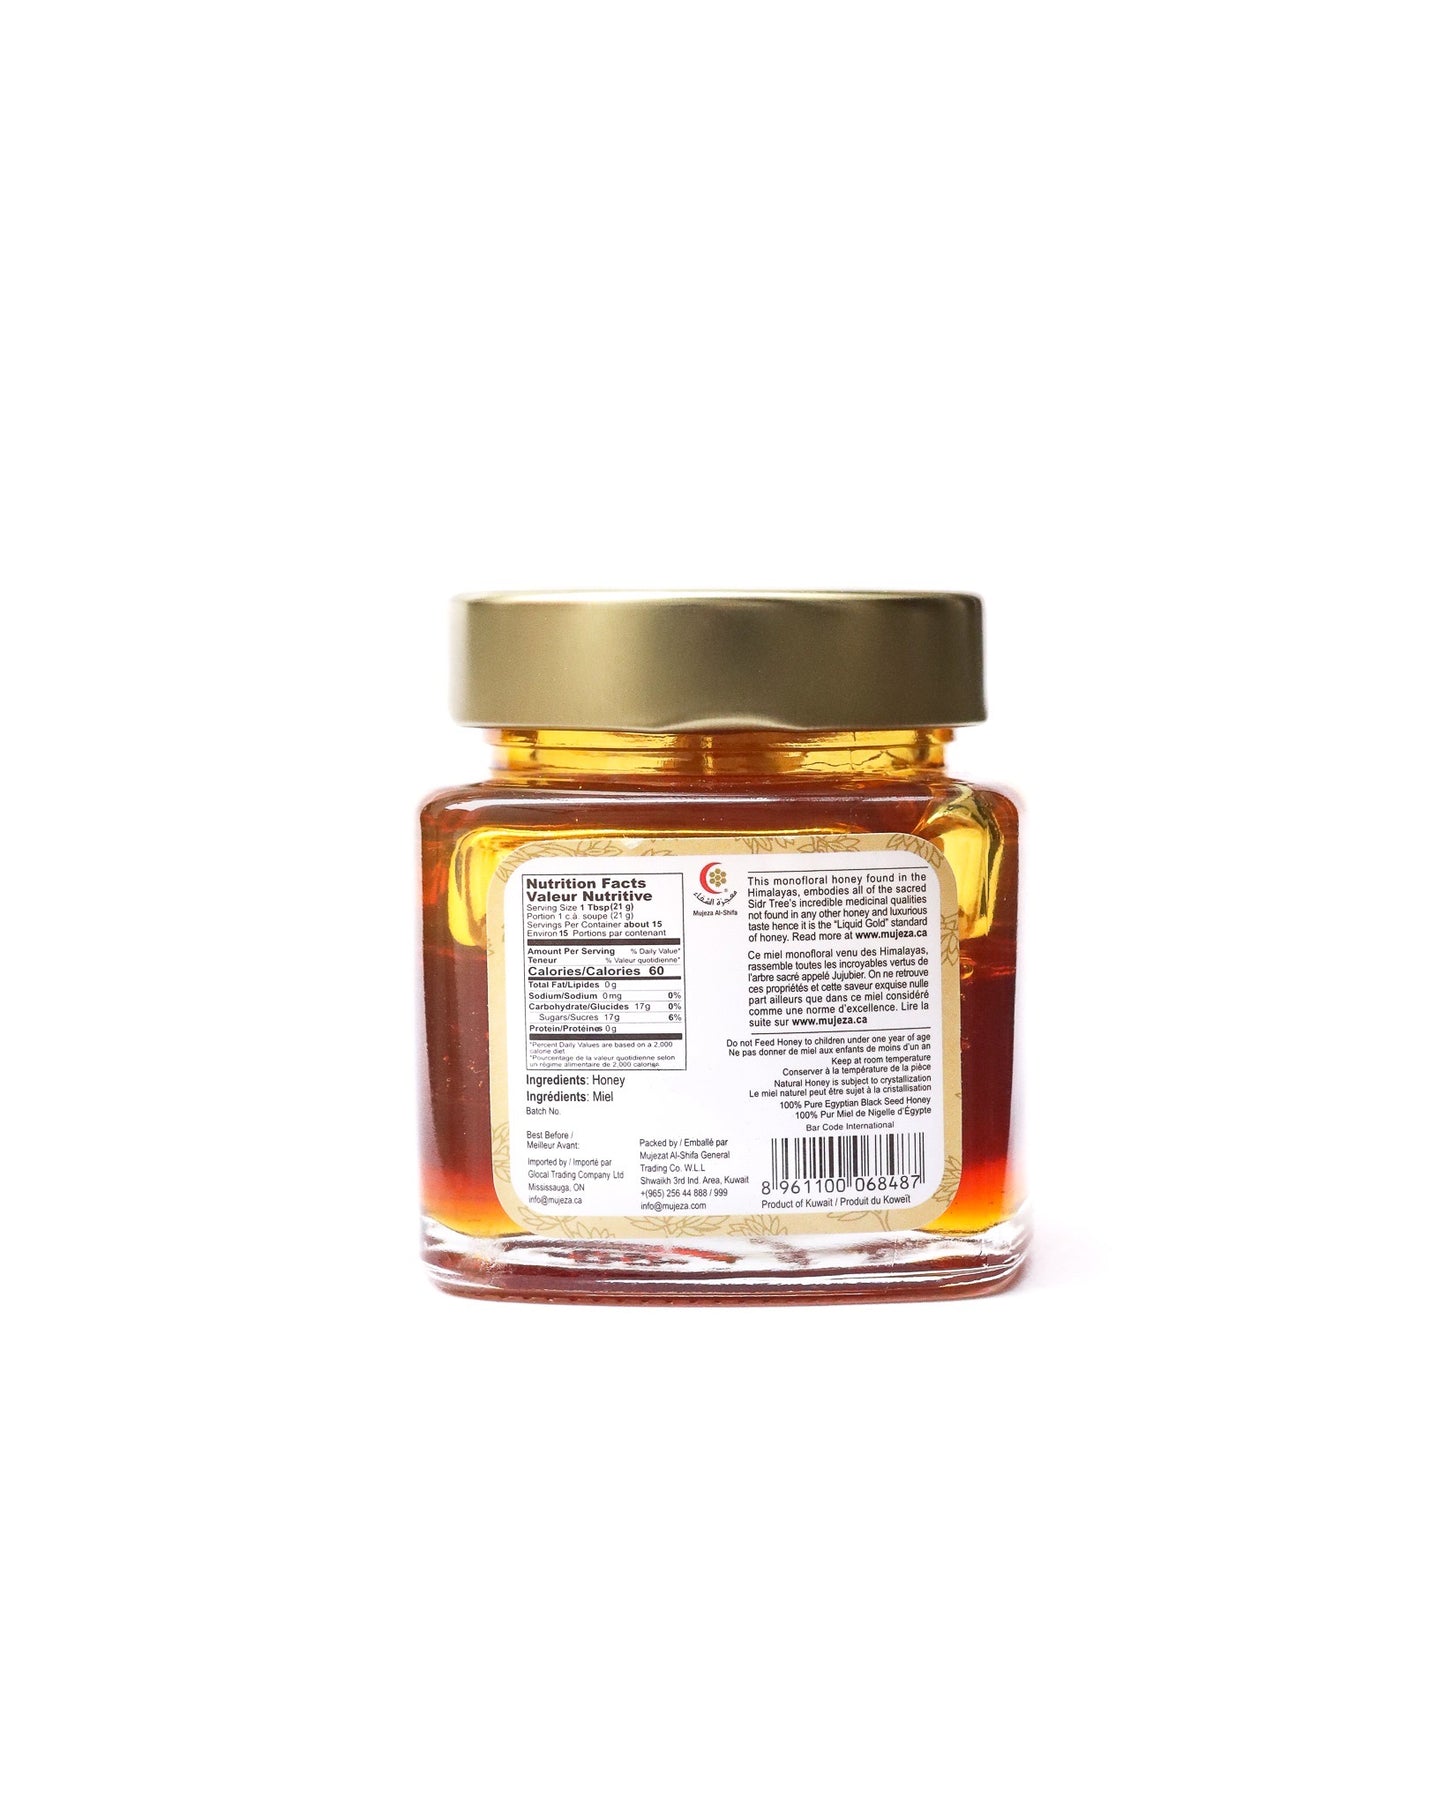 Mountain Sidr Plain Honey Kashmiri (250g) - Mujeza Honey